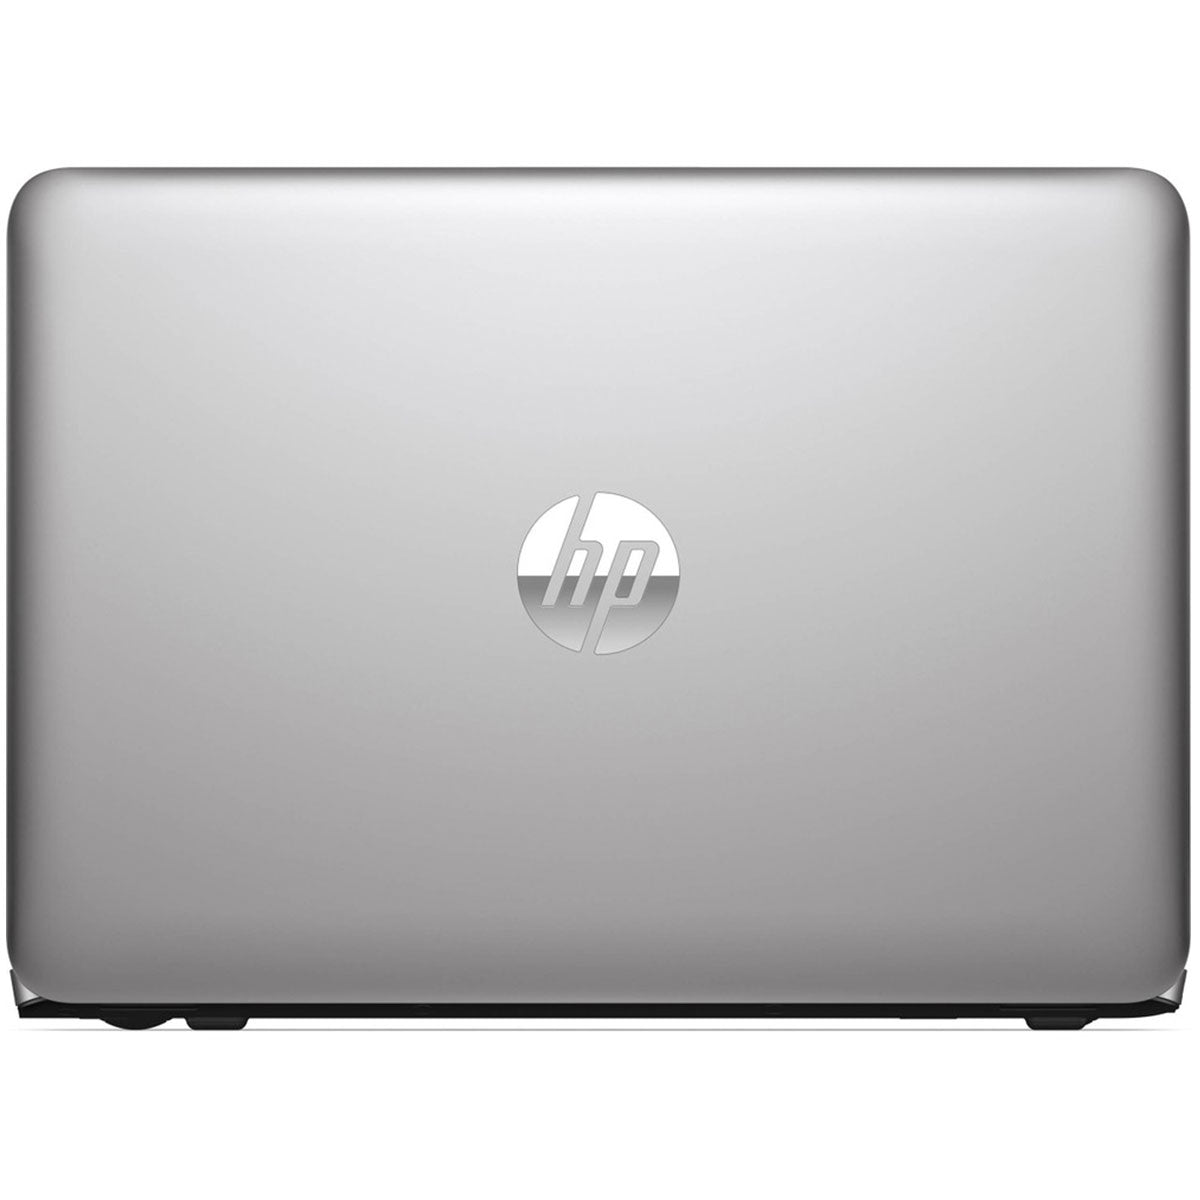 HP EliteBook 820 G3 Intel i7, 6th Gen Ultrabook Laptop 512GB SSD Laptops - Refurbished